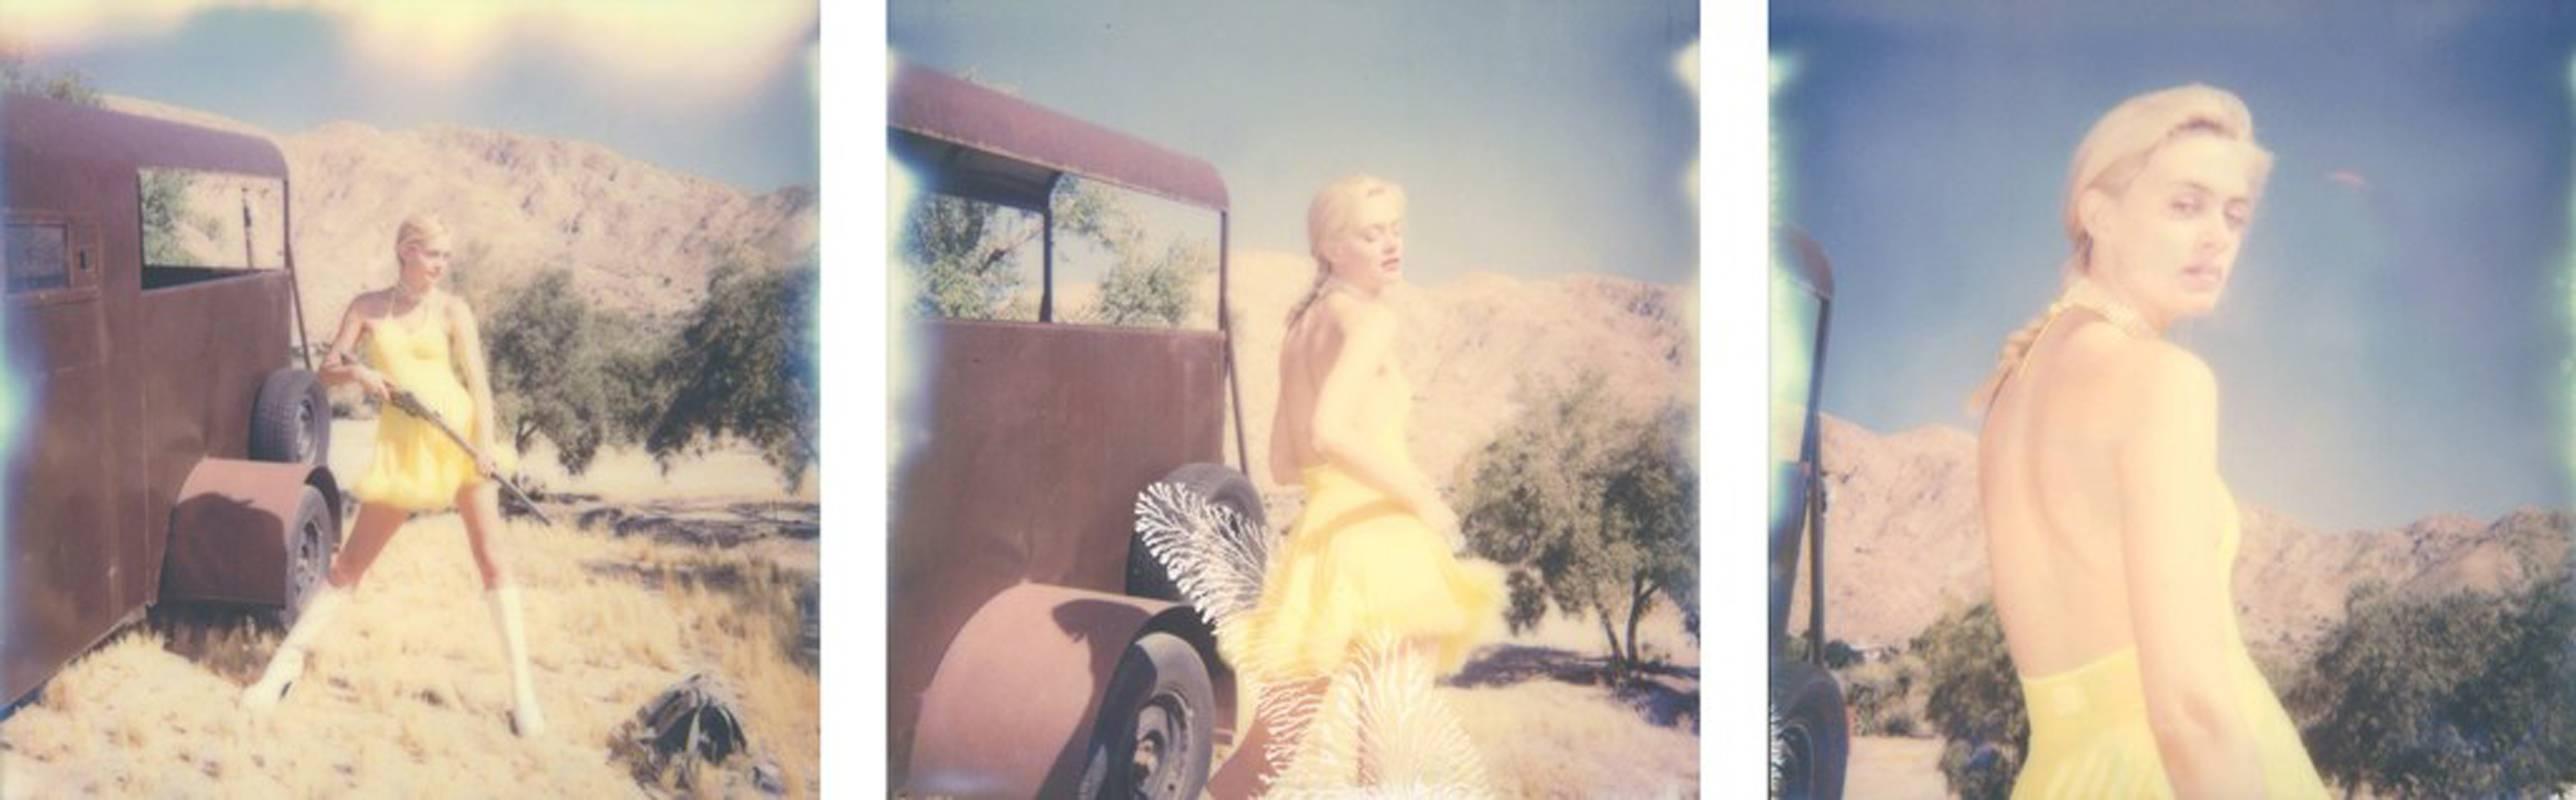 Stefanie Schneider Figurative Photograph - Marilyn (Heavenly Falls) - triptych - mounted